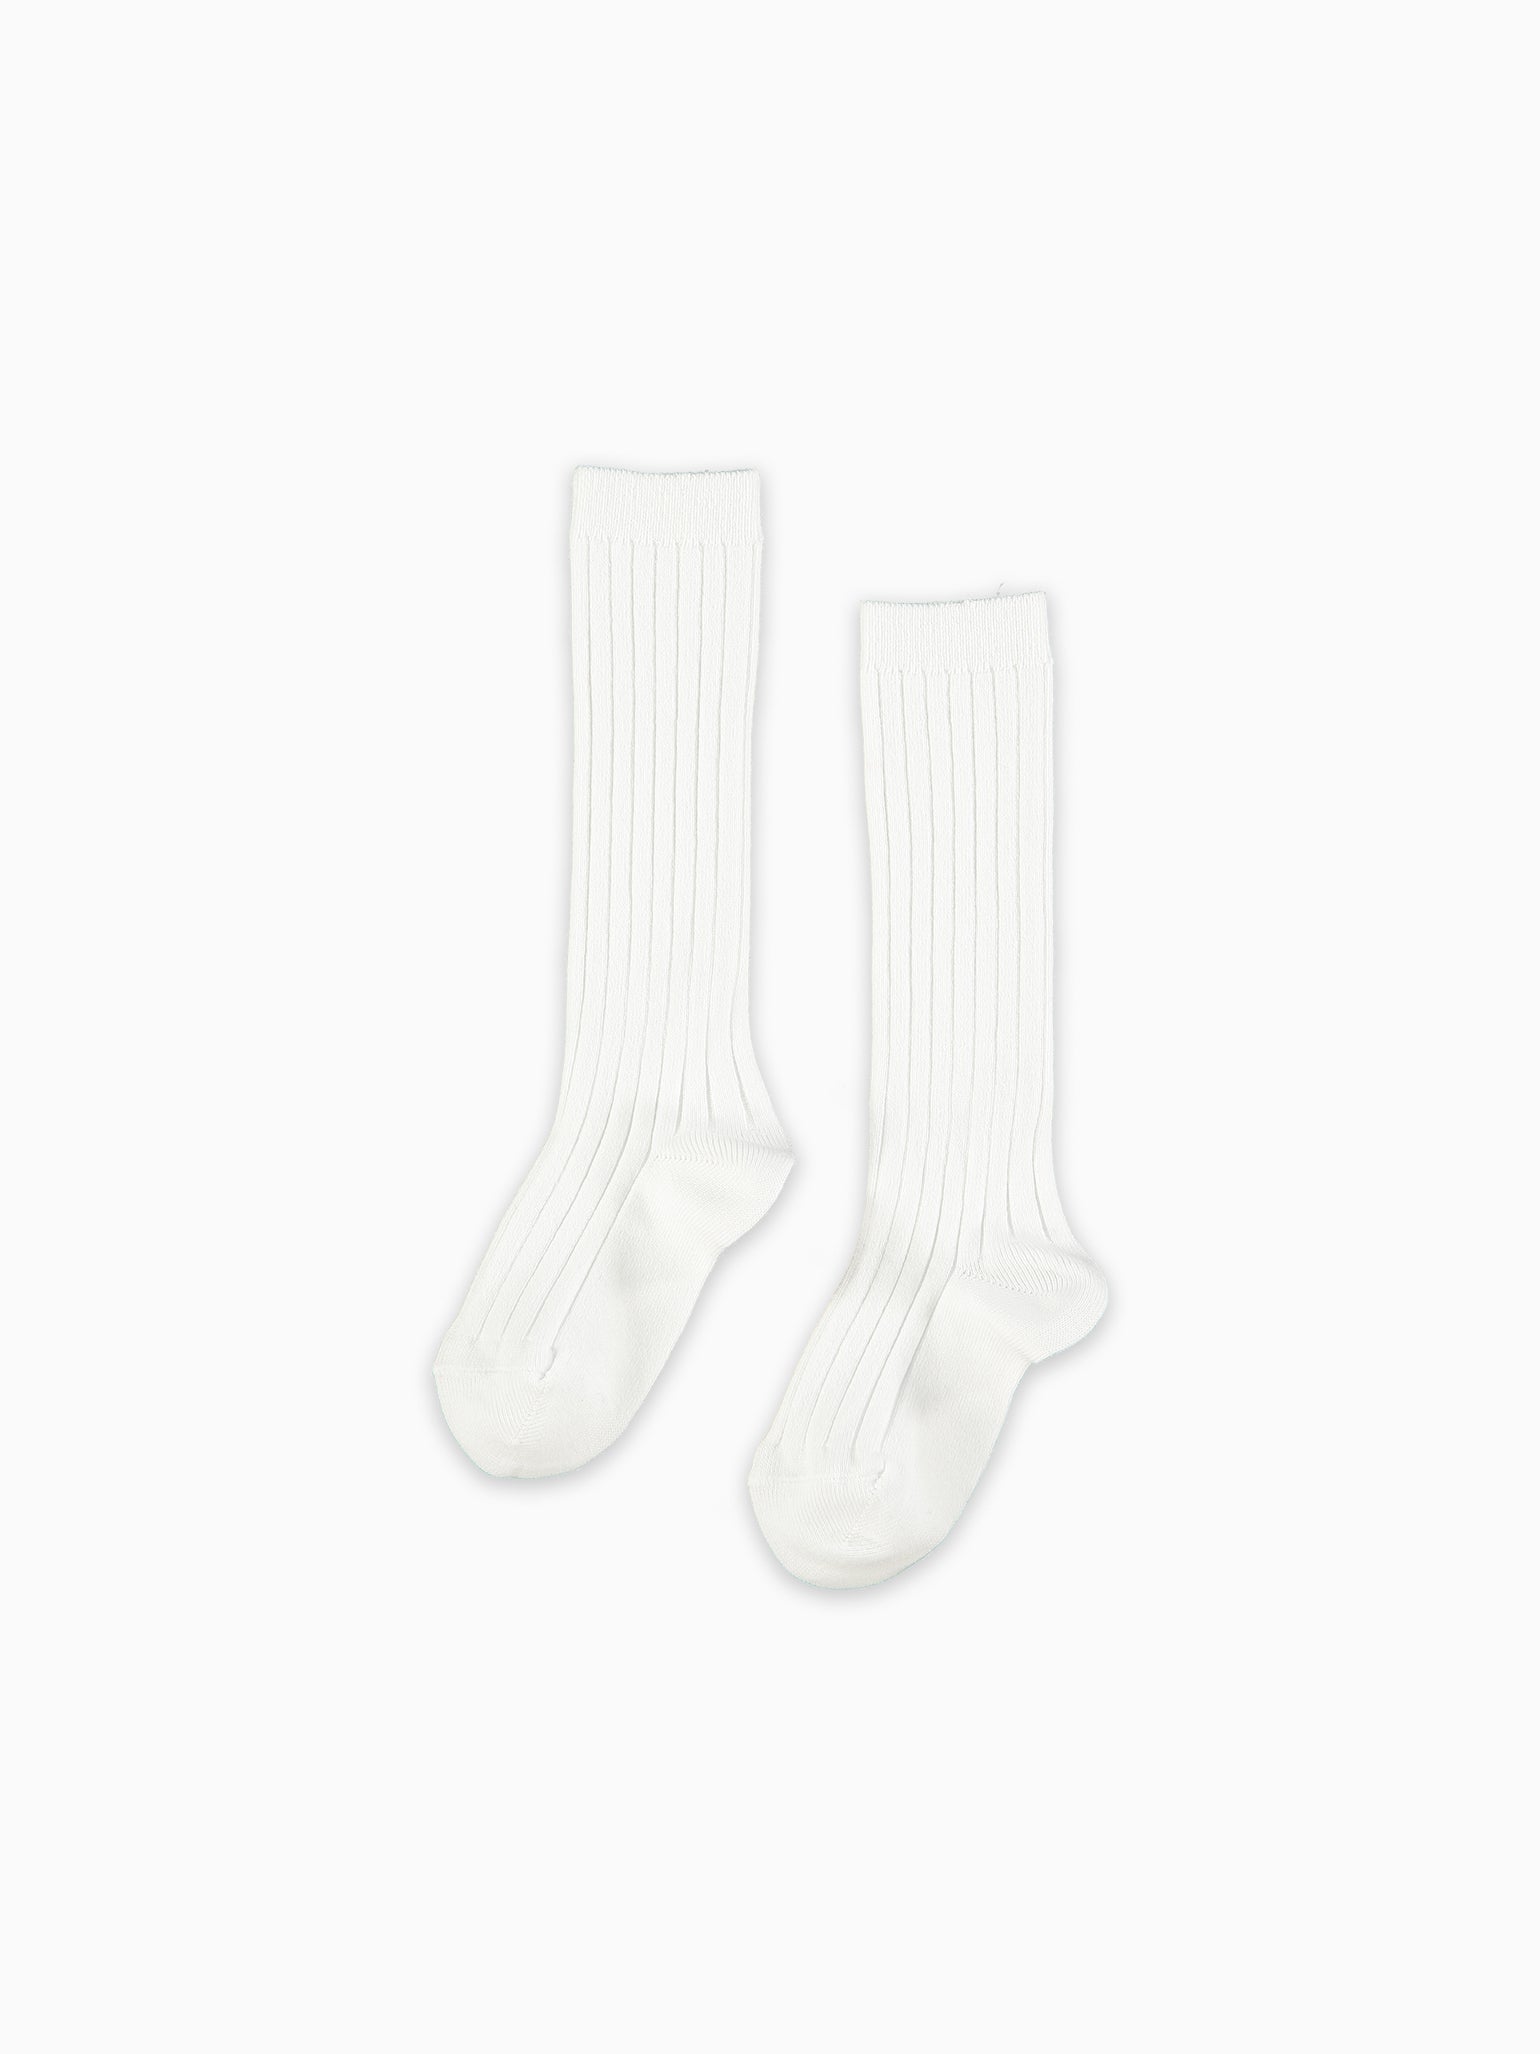 White Mix Ribbed Knee High Kids Socks Set